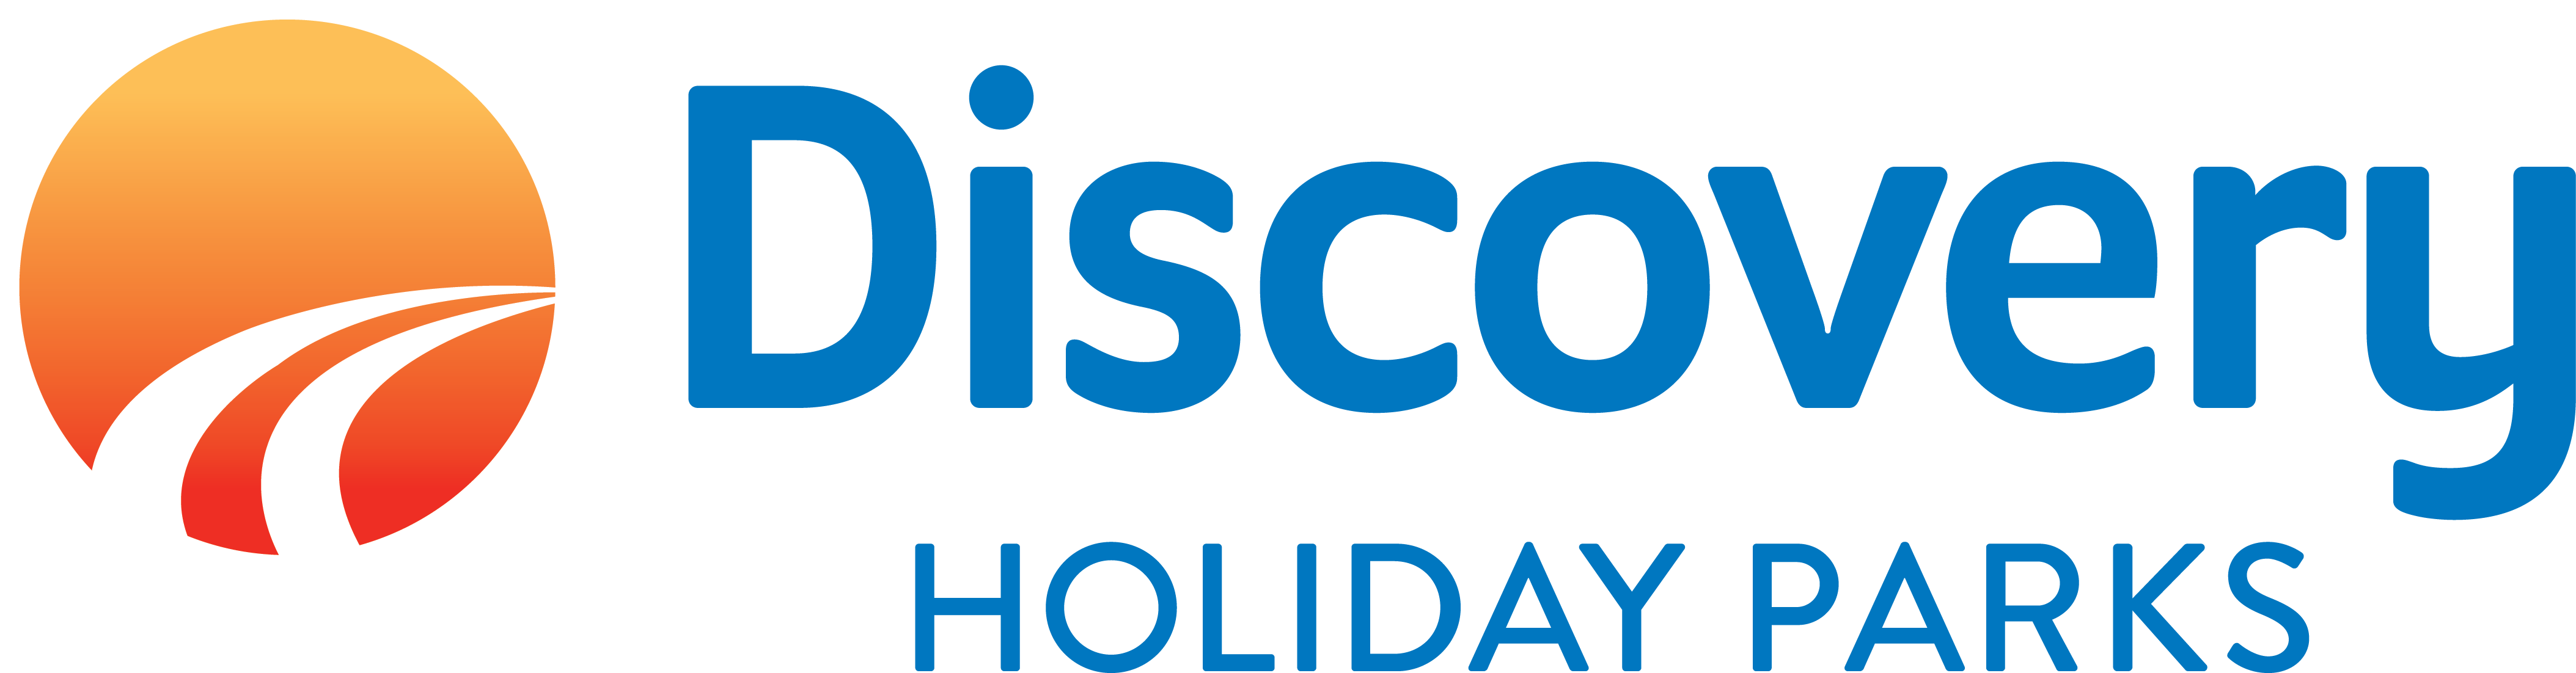 Discovery Holiday Parks Logo